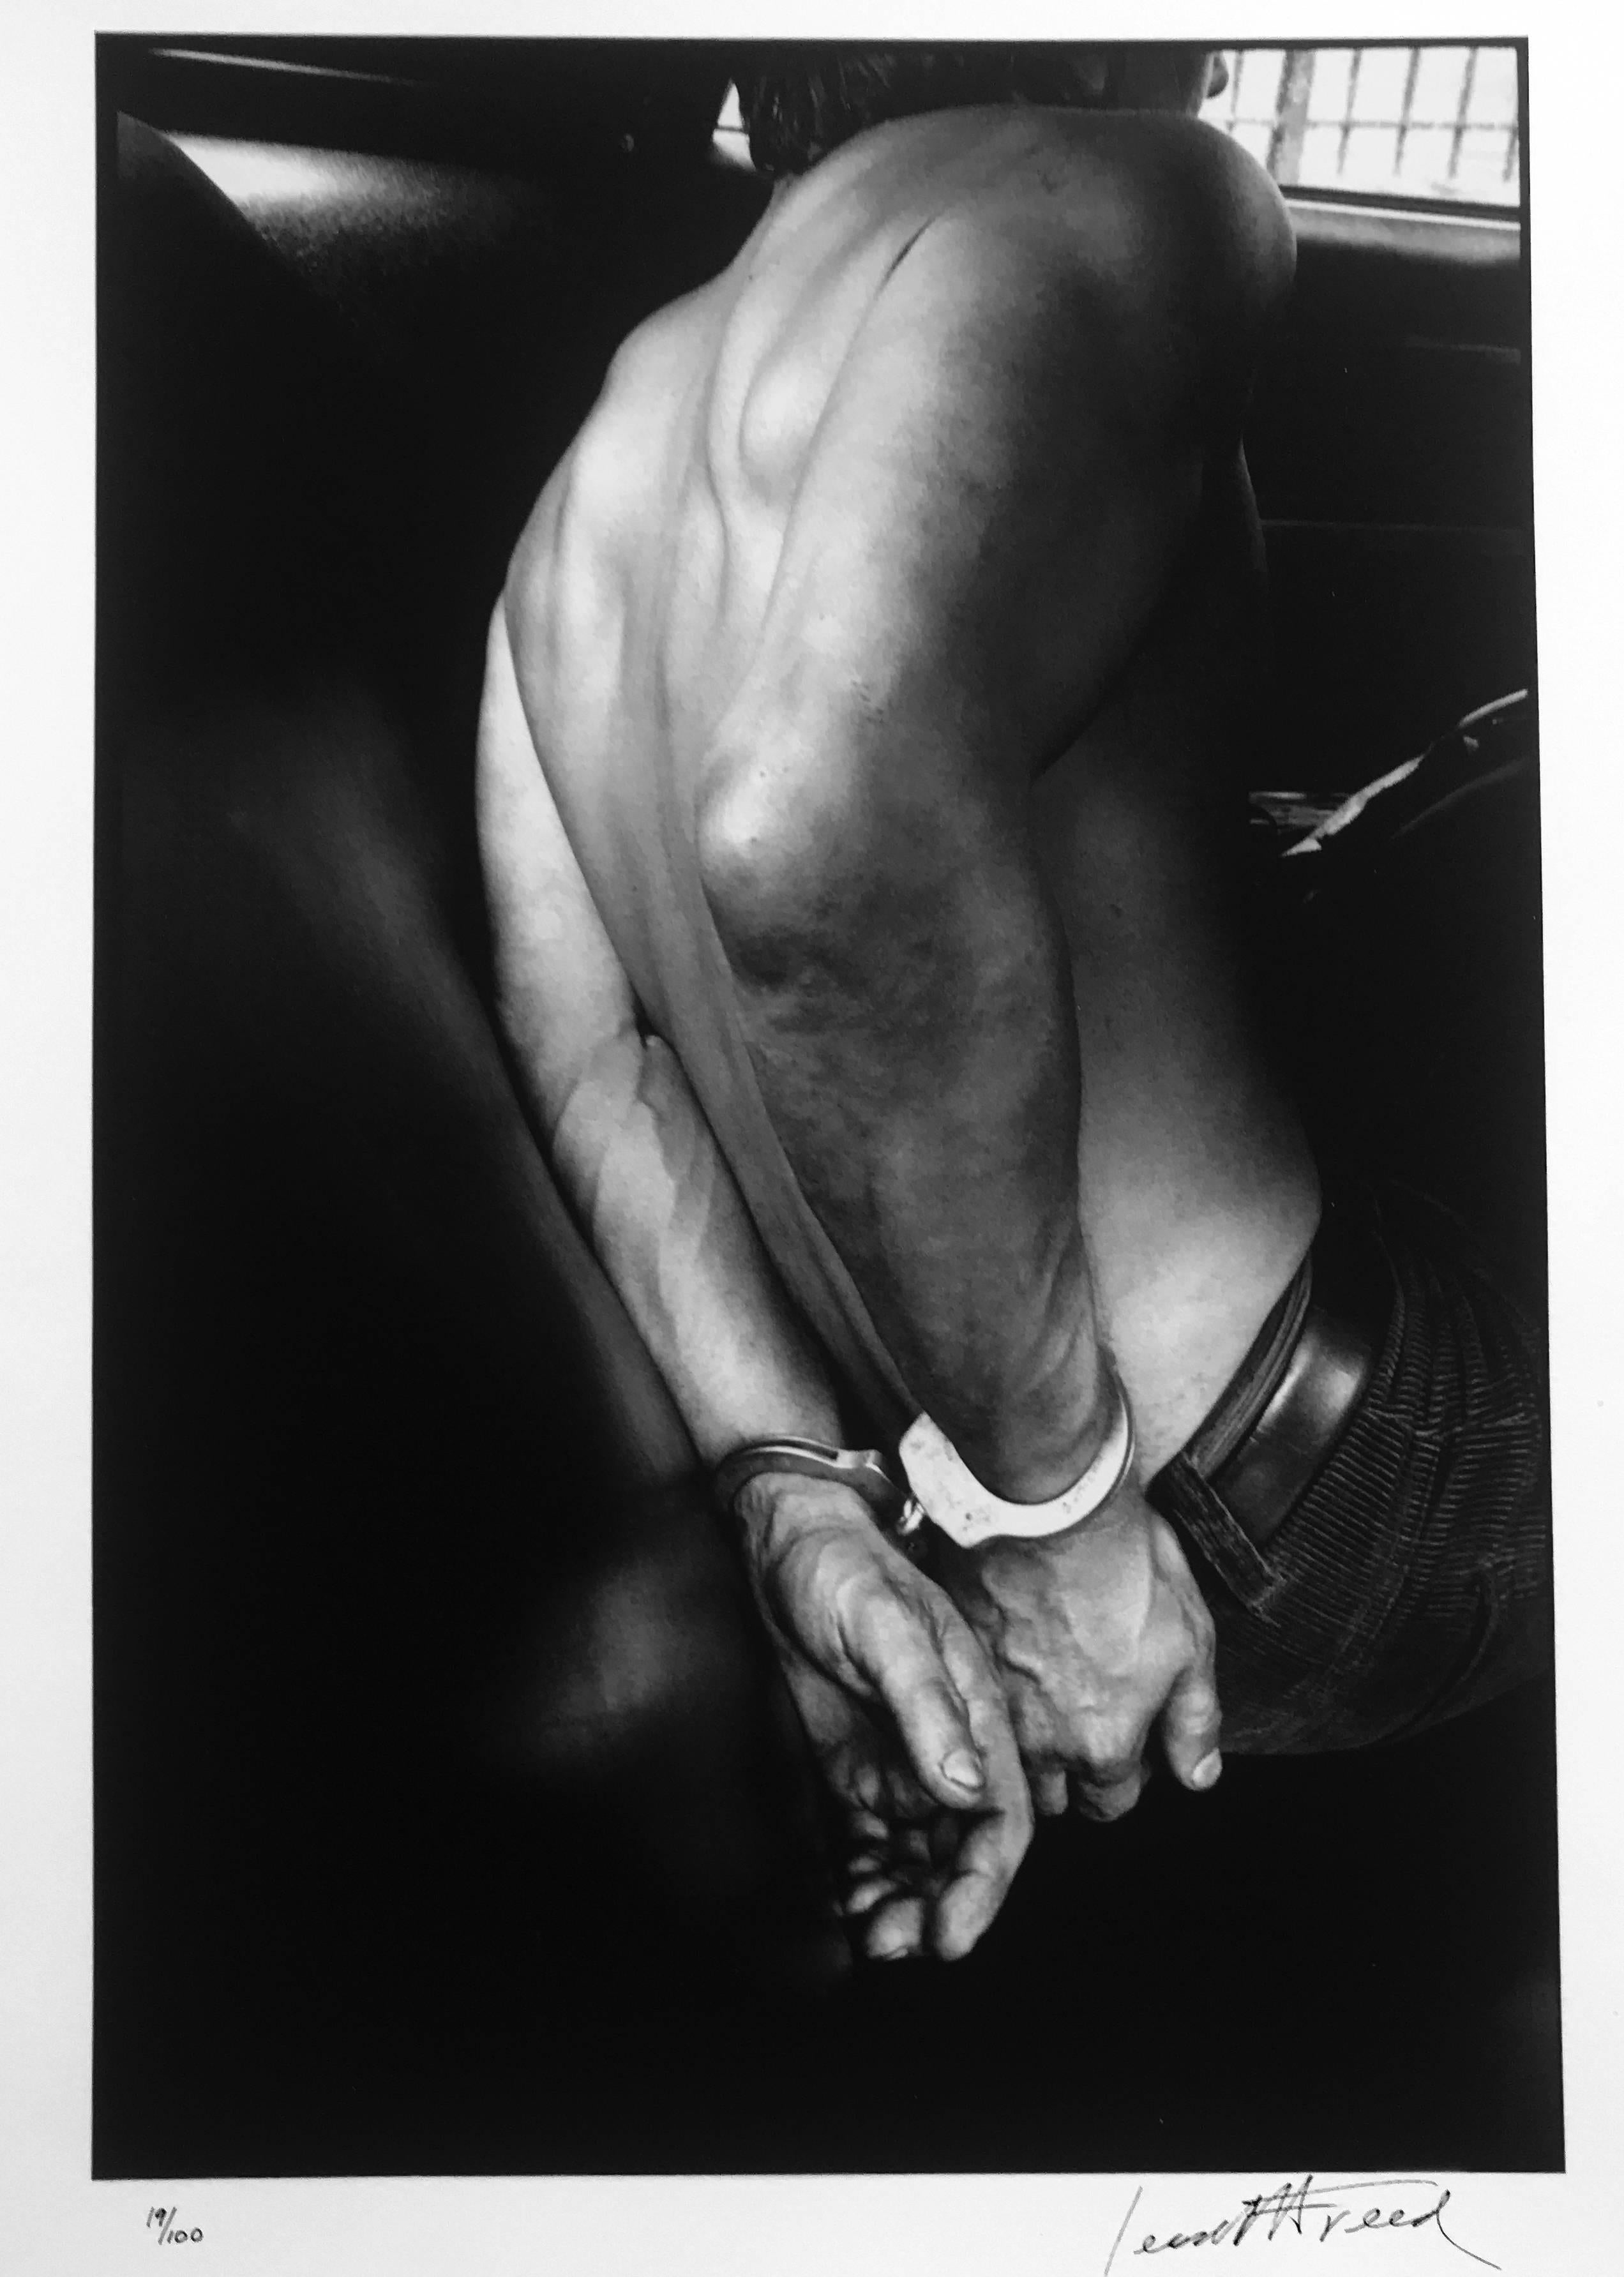 Leonard Freed Figurative Photograph - Handcuffed, New York City, Black & White Documentary Photograph, Edition 19/25